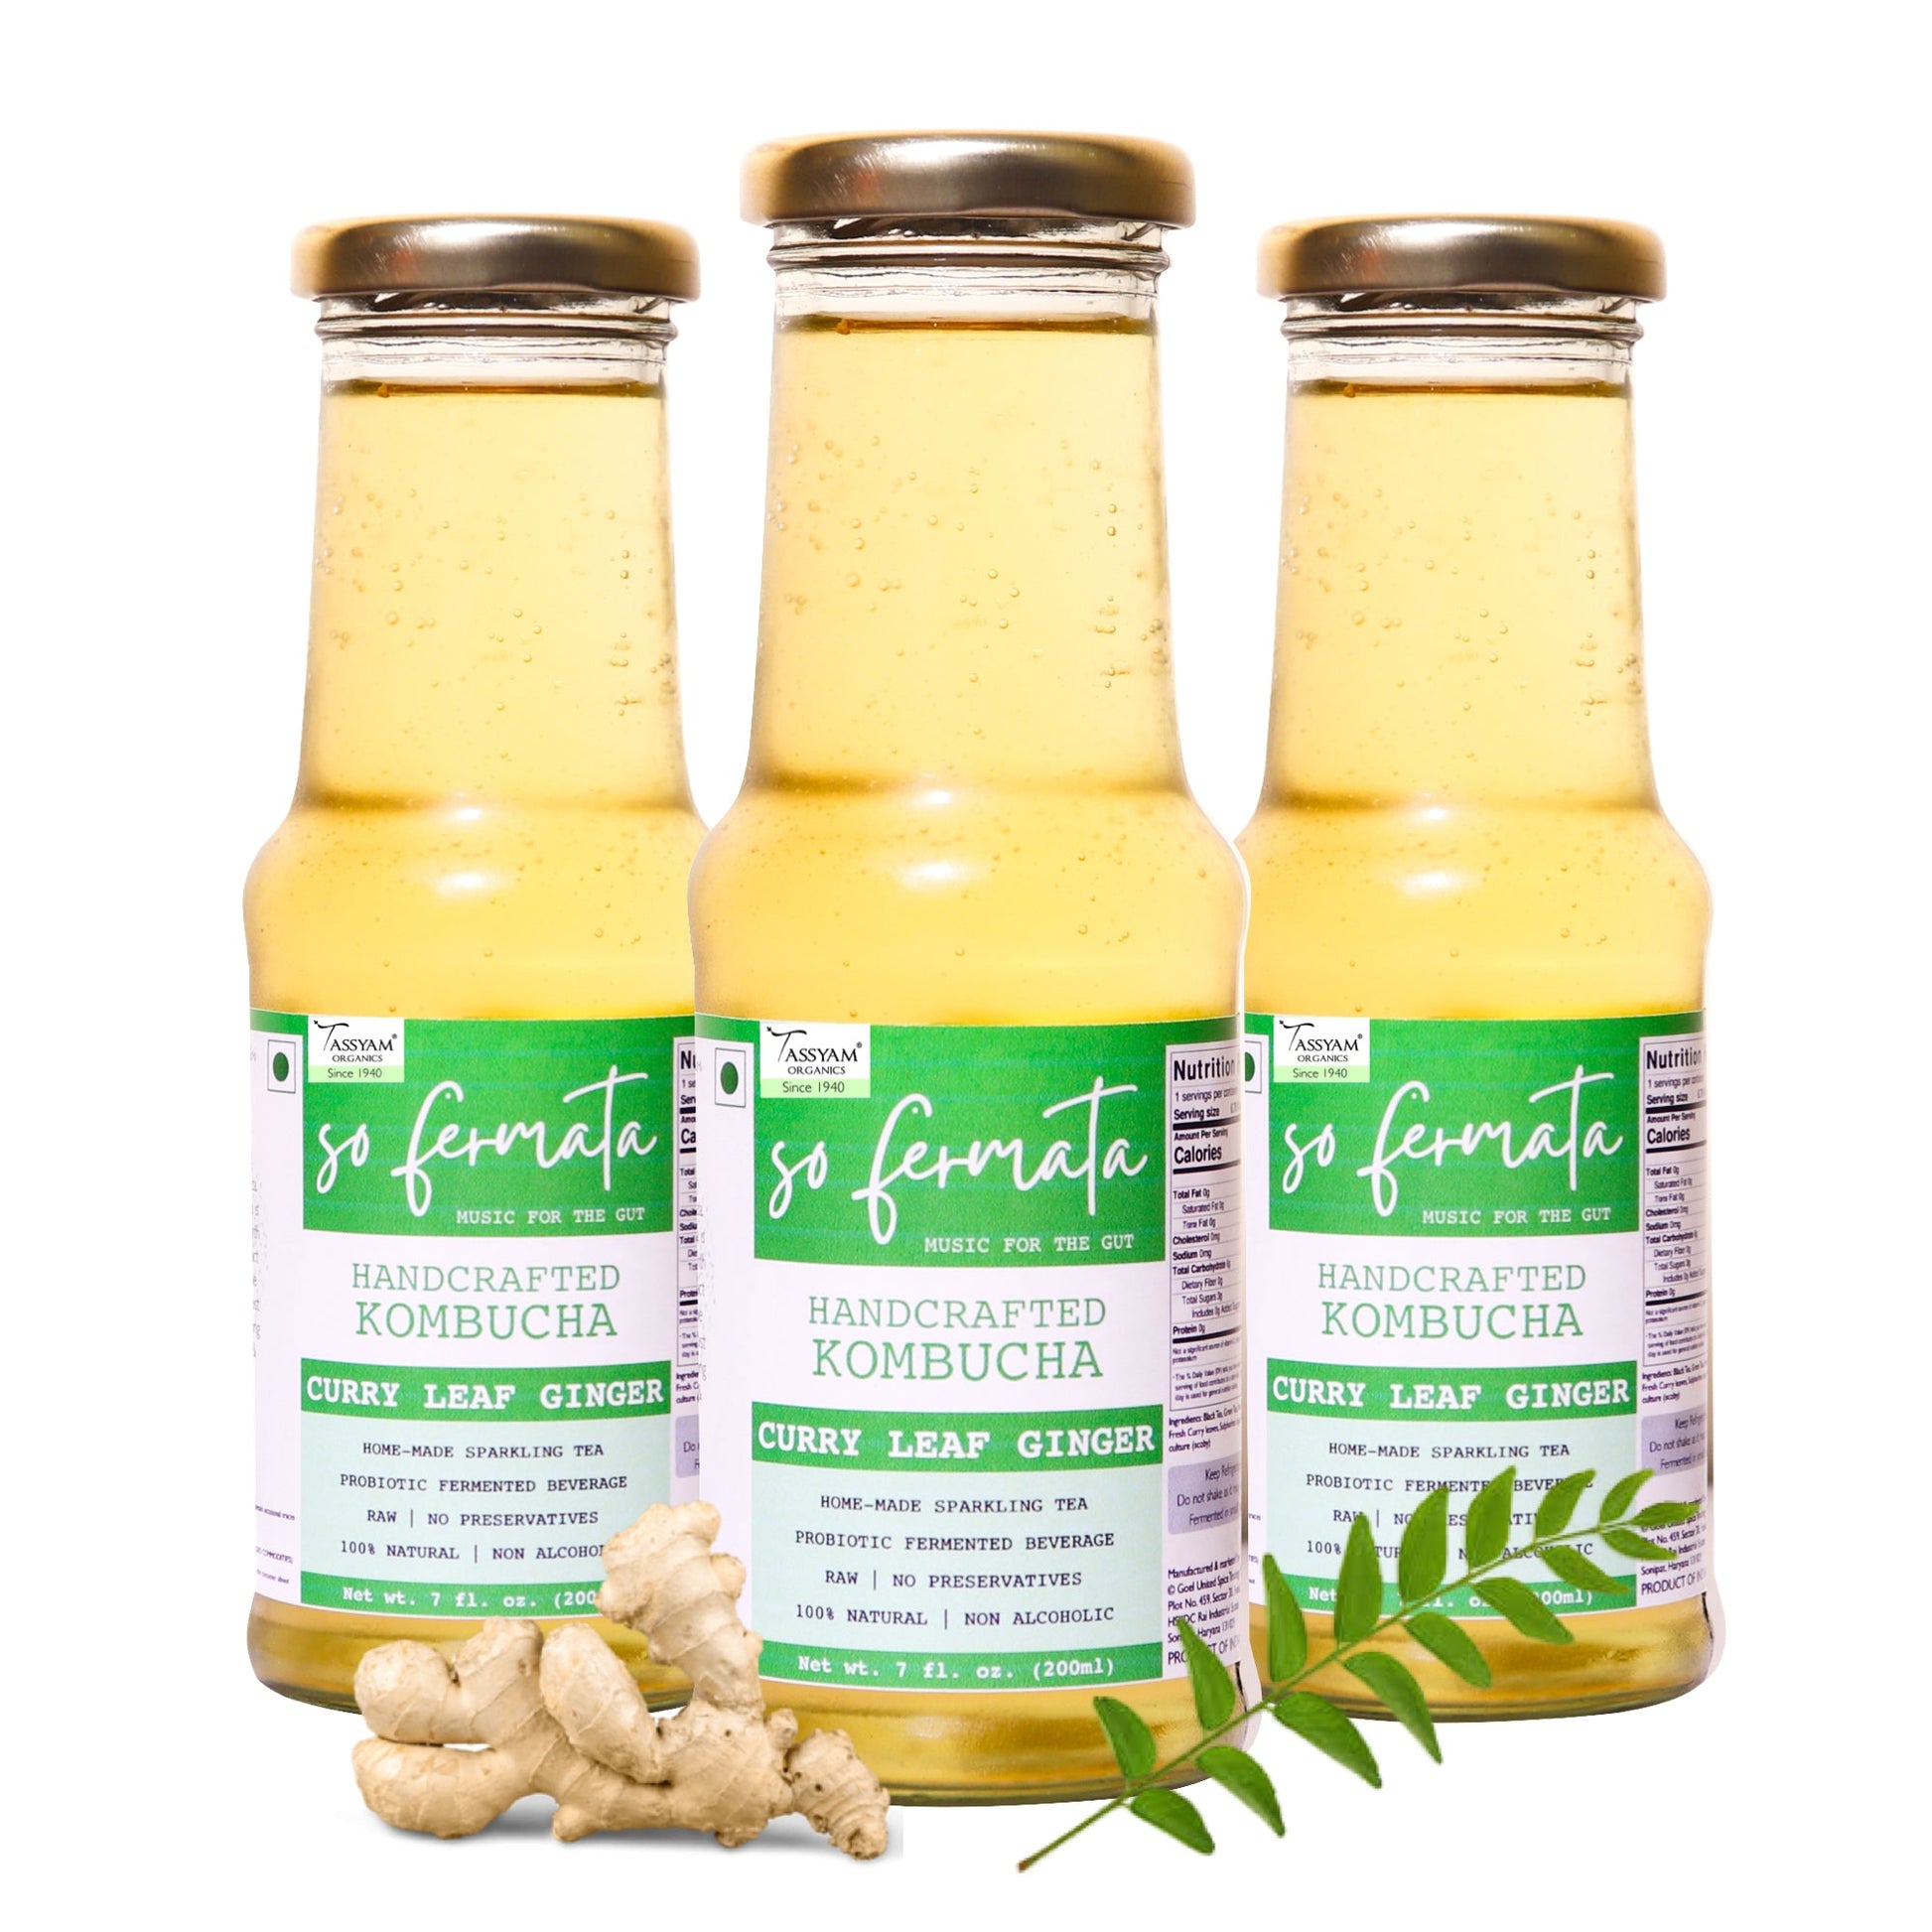 So Fermata Artisanal Kombucha - Curry leaf Ginger - Tassyam Organics